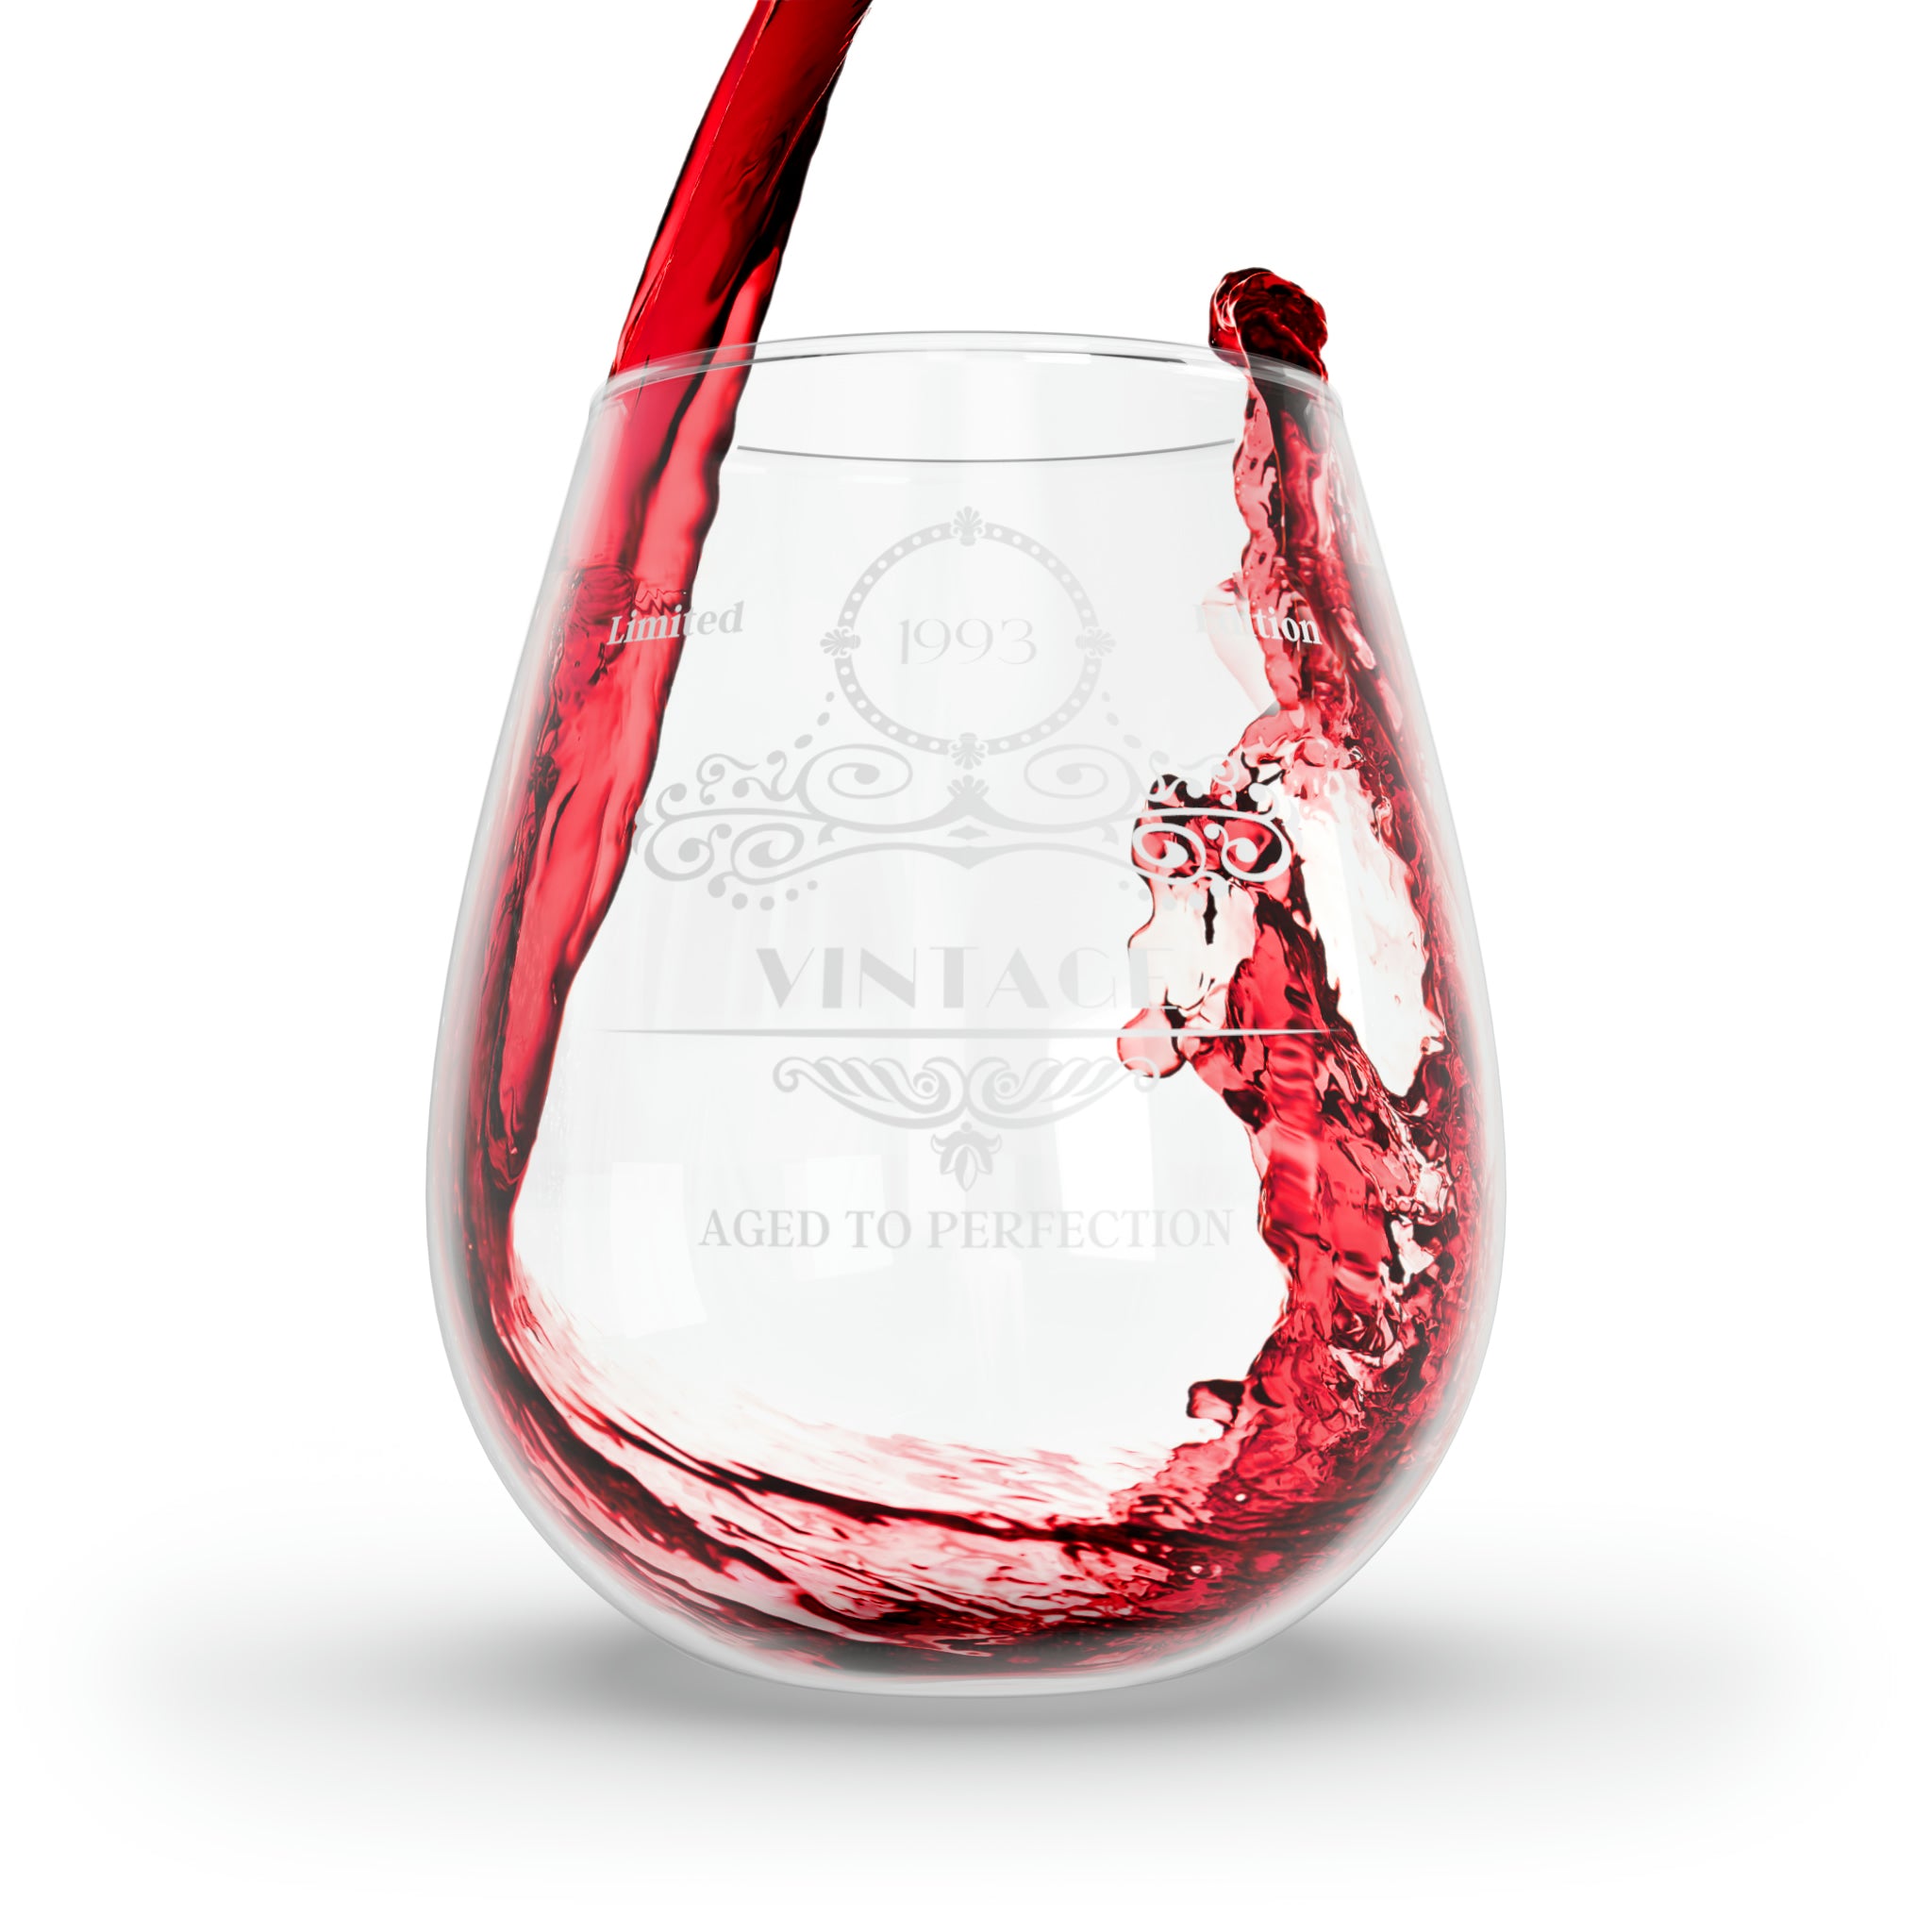 Vintage 1993 - Stemless Wine Glass, 11.75oz